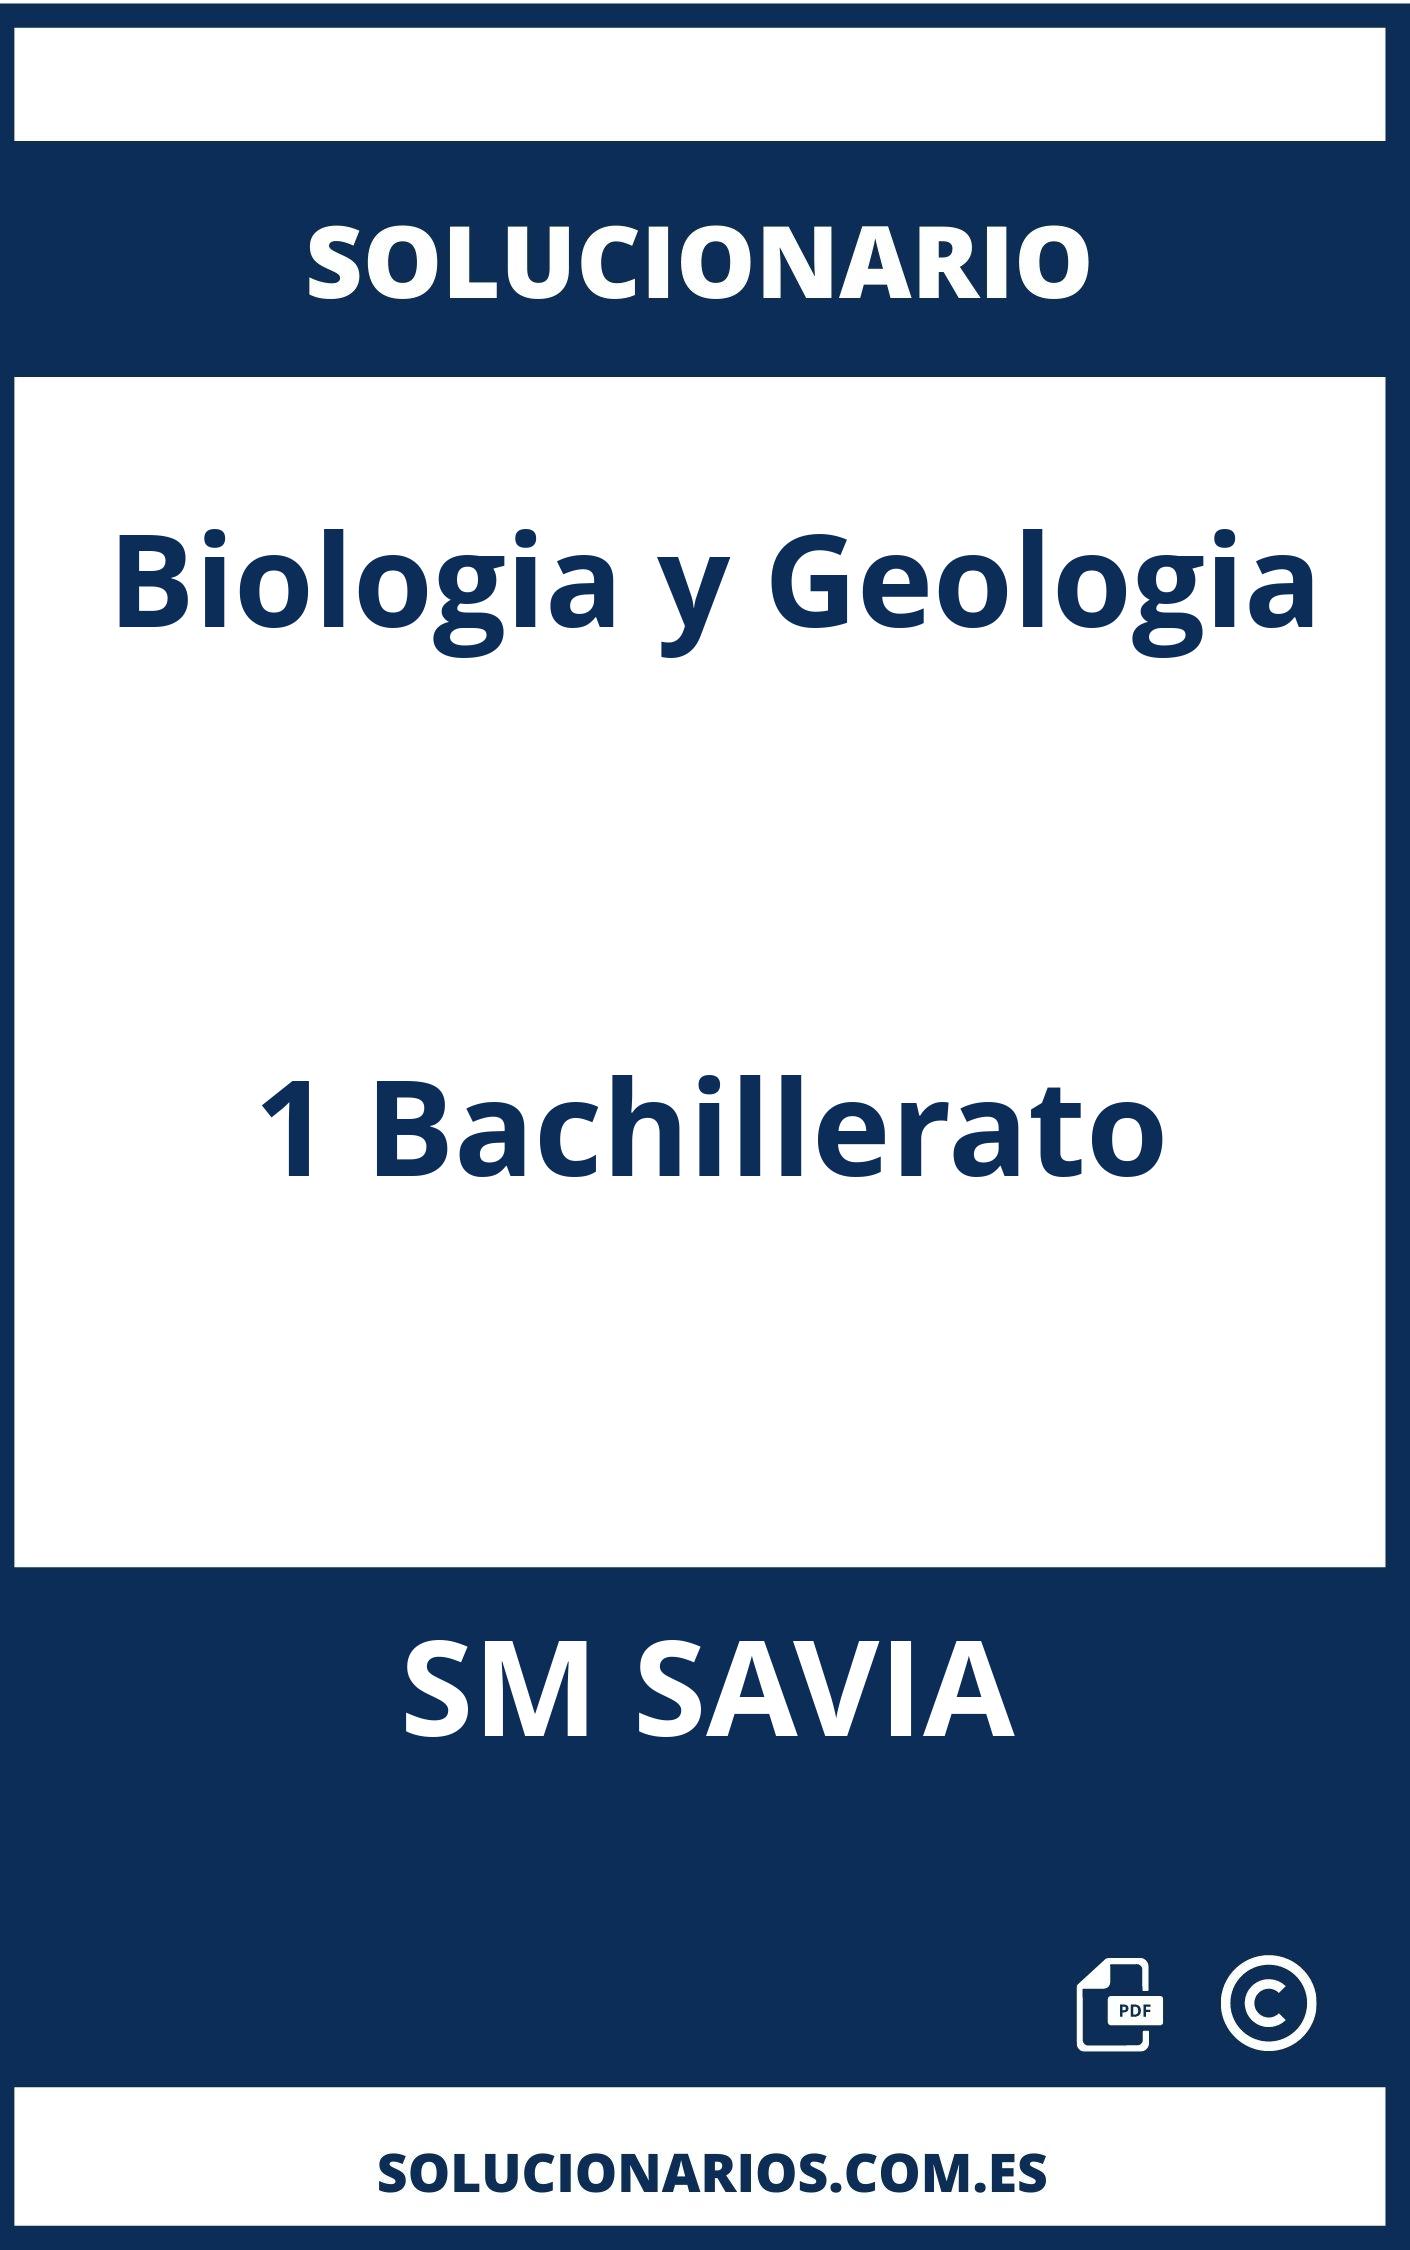 Solucionario Biologia y Geologia 1 Bachillerato SM SAVIA